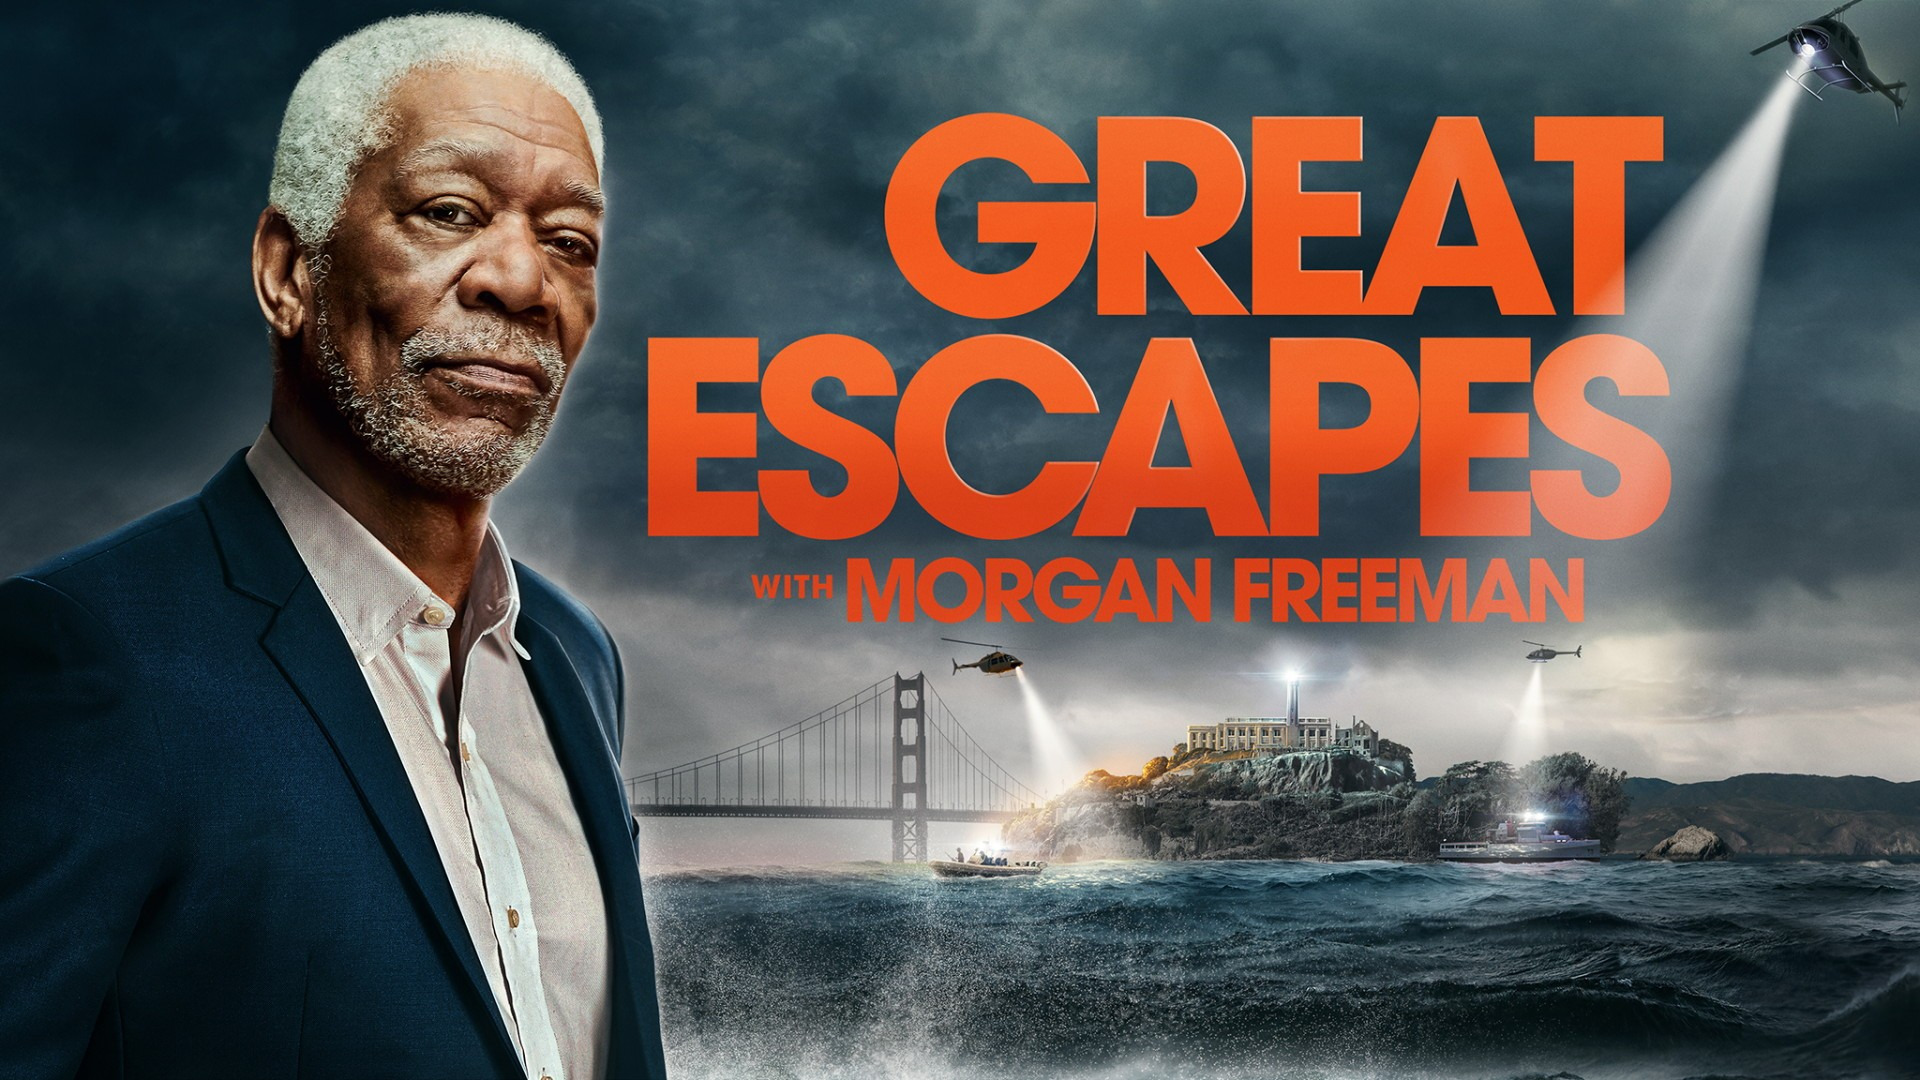 Show Great Escapes with Morgan Freeman